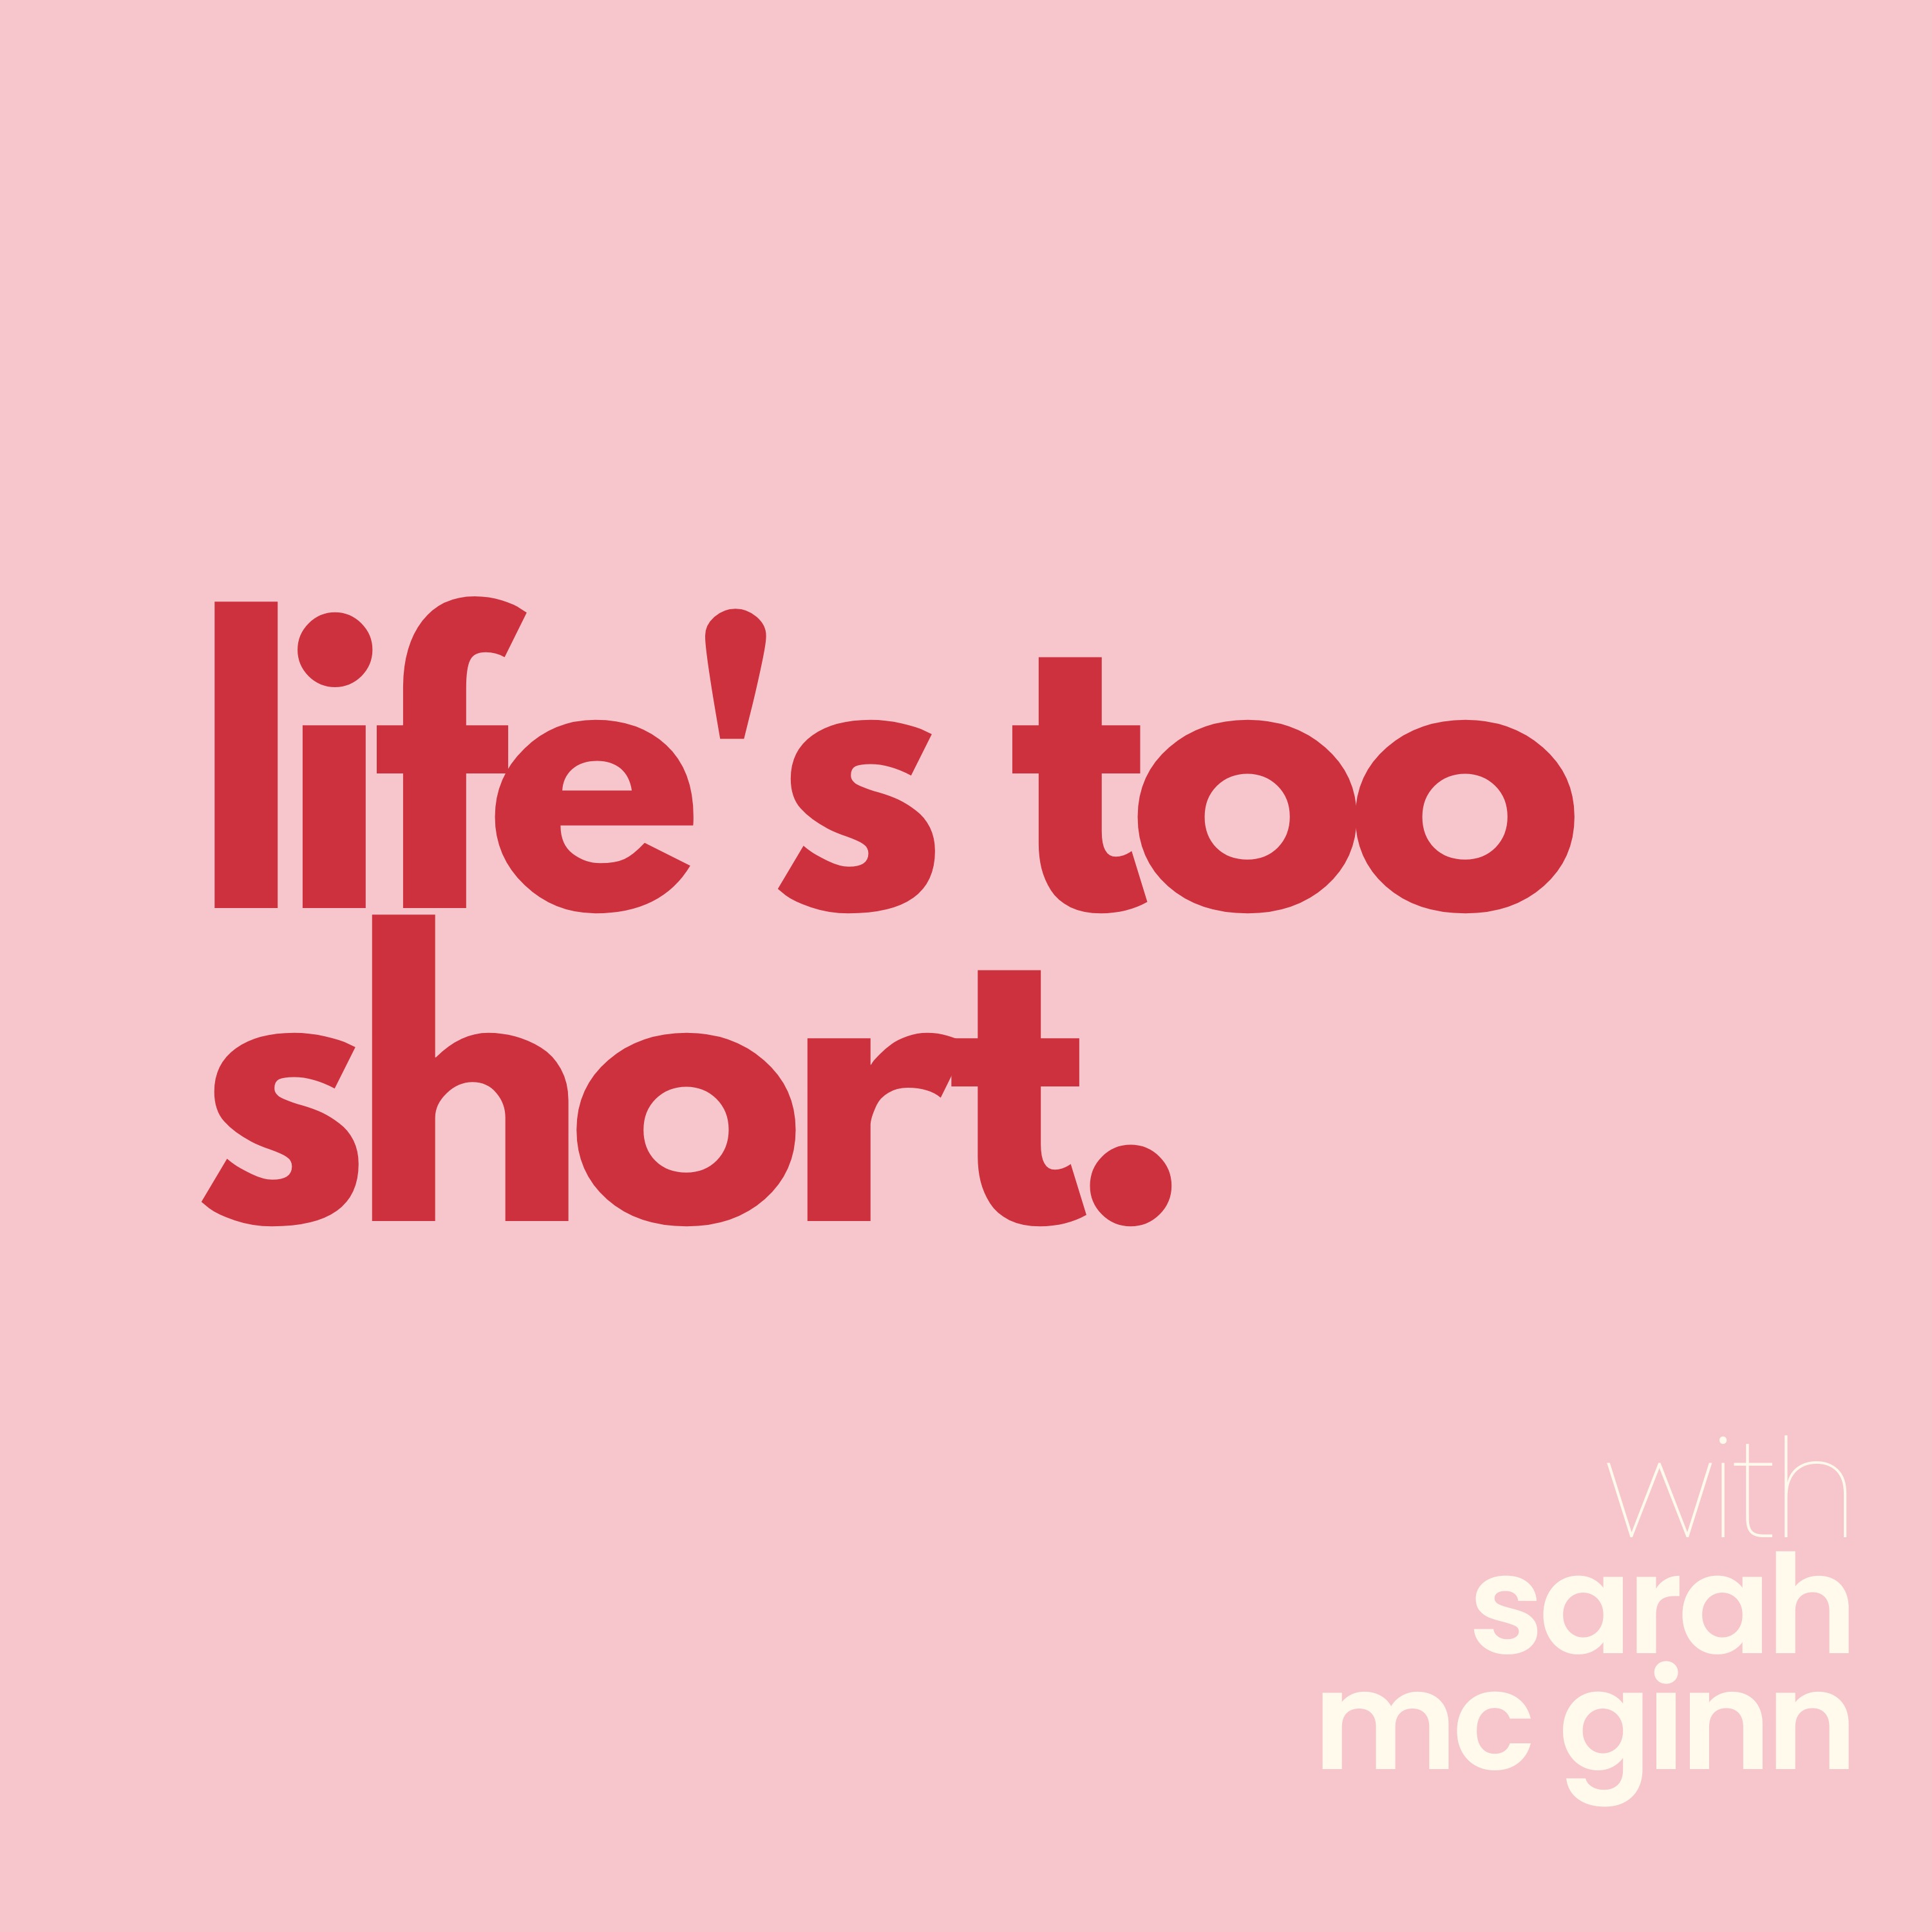 life's too short - Hosted by Sarah Mc Ginn